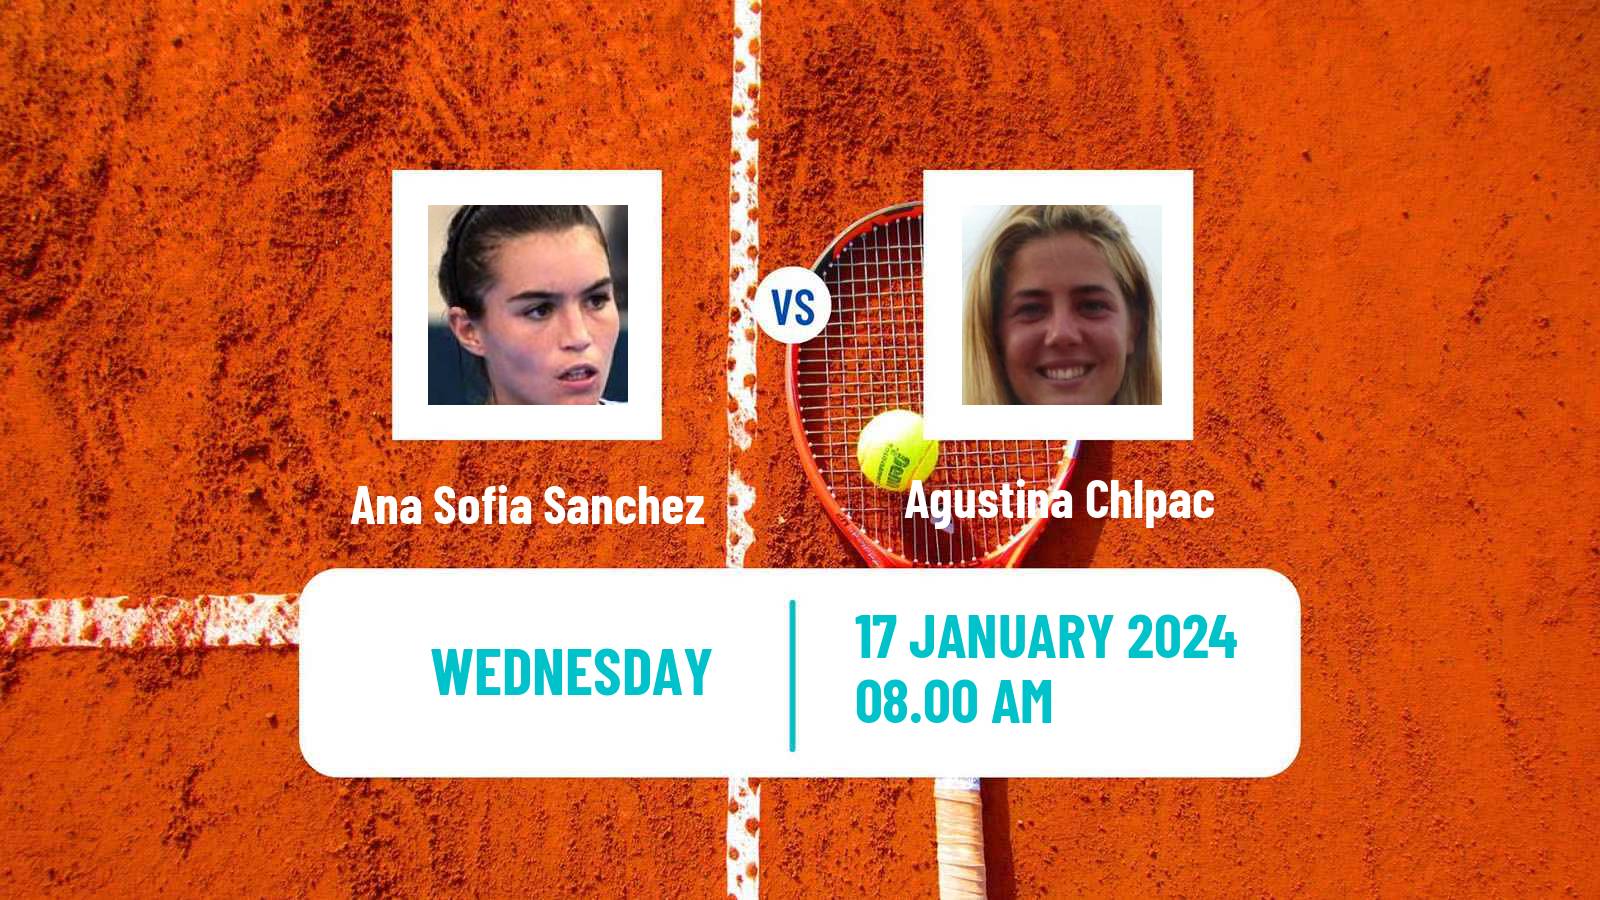 Tennis ITF W35 Buenos Aires Women Ana Sofia Sanchez - Agustina Chlpac